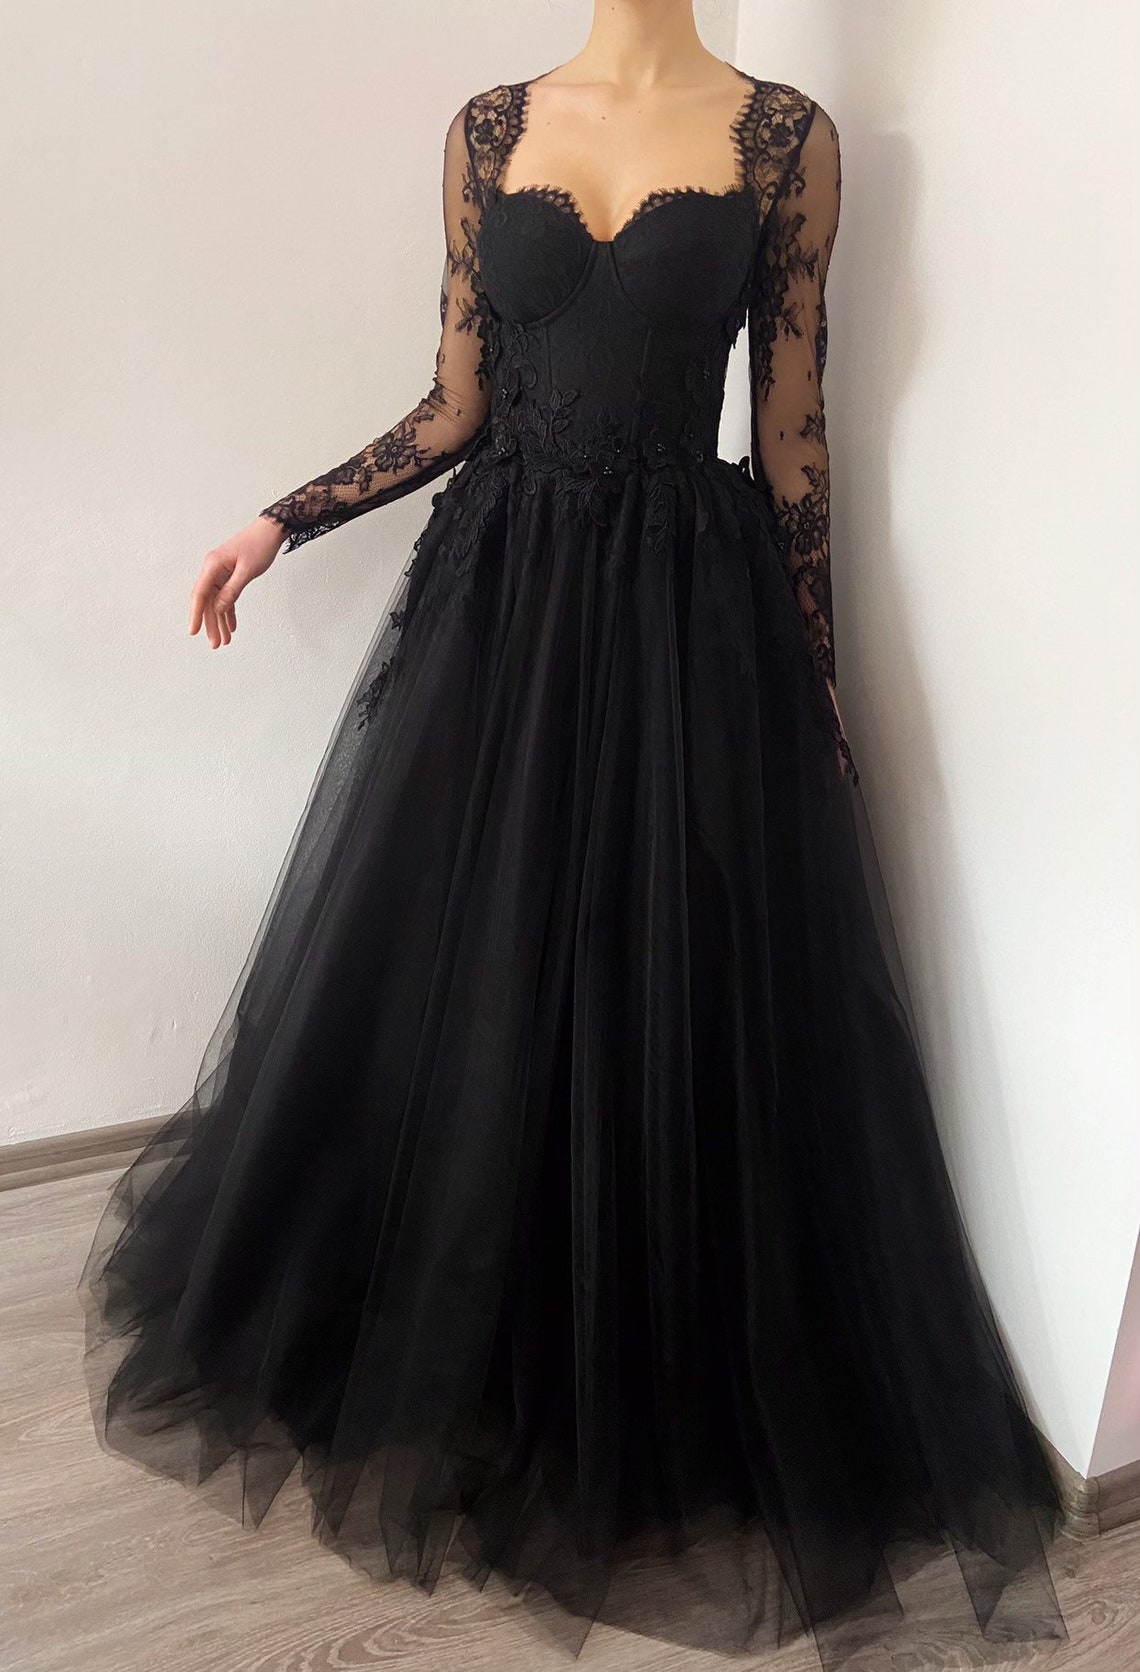 Black gothic corset wedding 3D lace floral tulle dress | Etsy